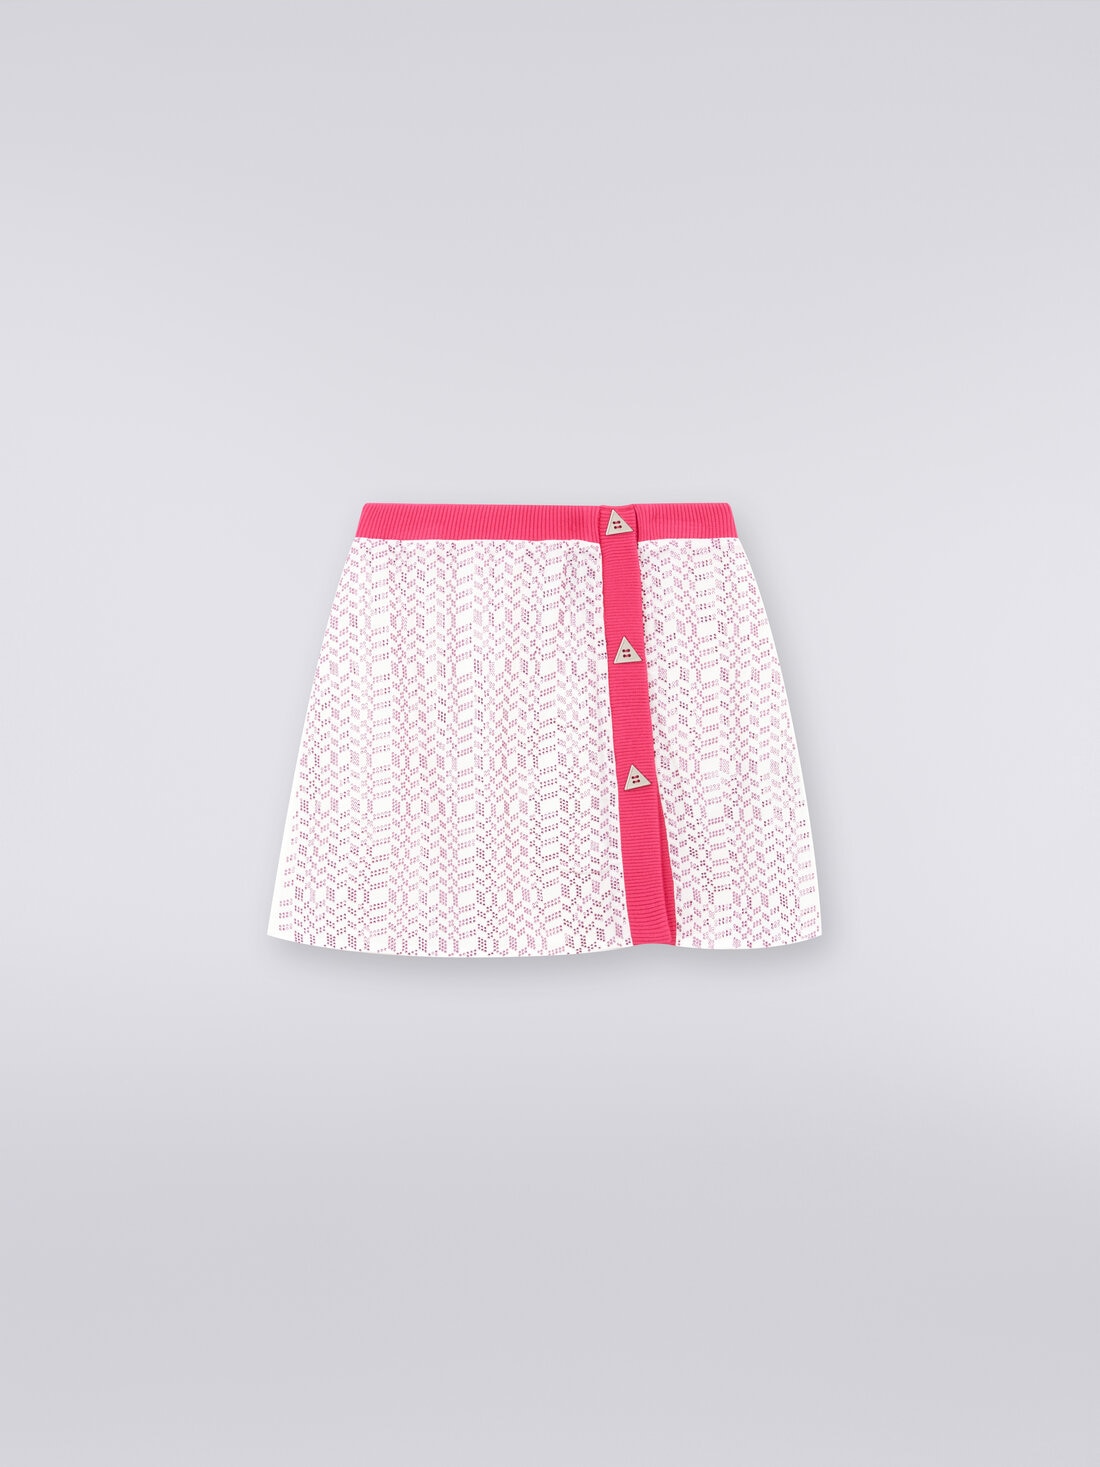 Silk and technical fabric skirt, Pink   - KS23WH05BV00EPS30CJ - 0